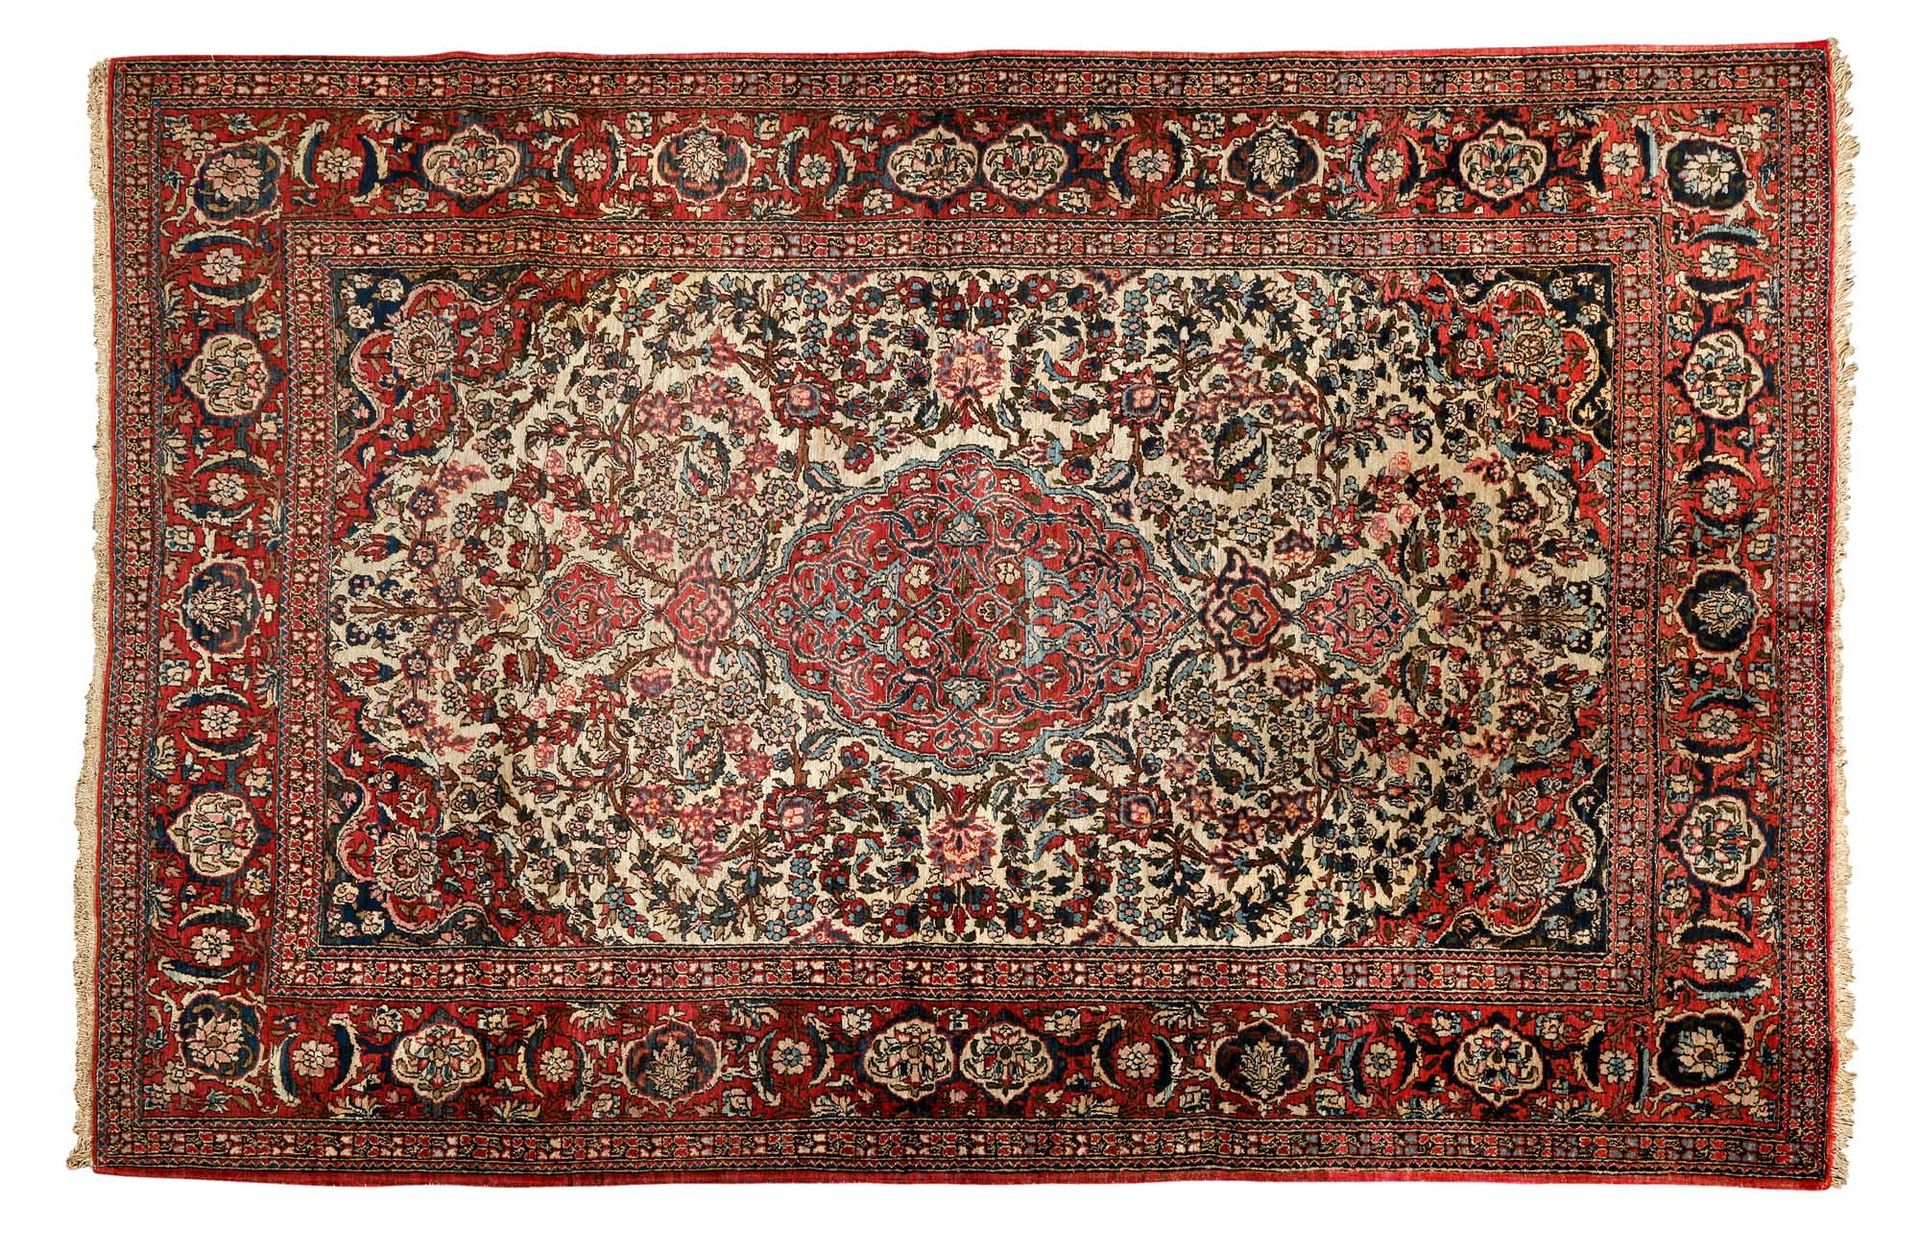 Null ISPAHAN carpet (Persia), late 19th century

Dimensions : 200 x 143cm

Techn&hellip;